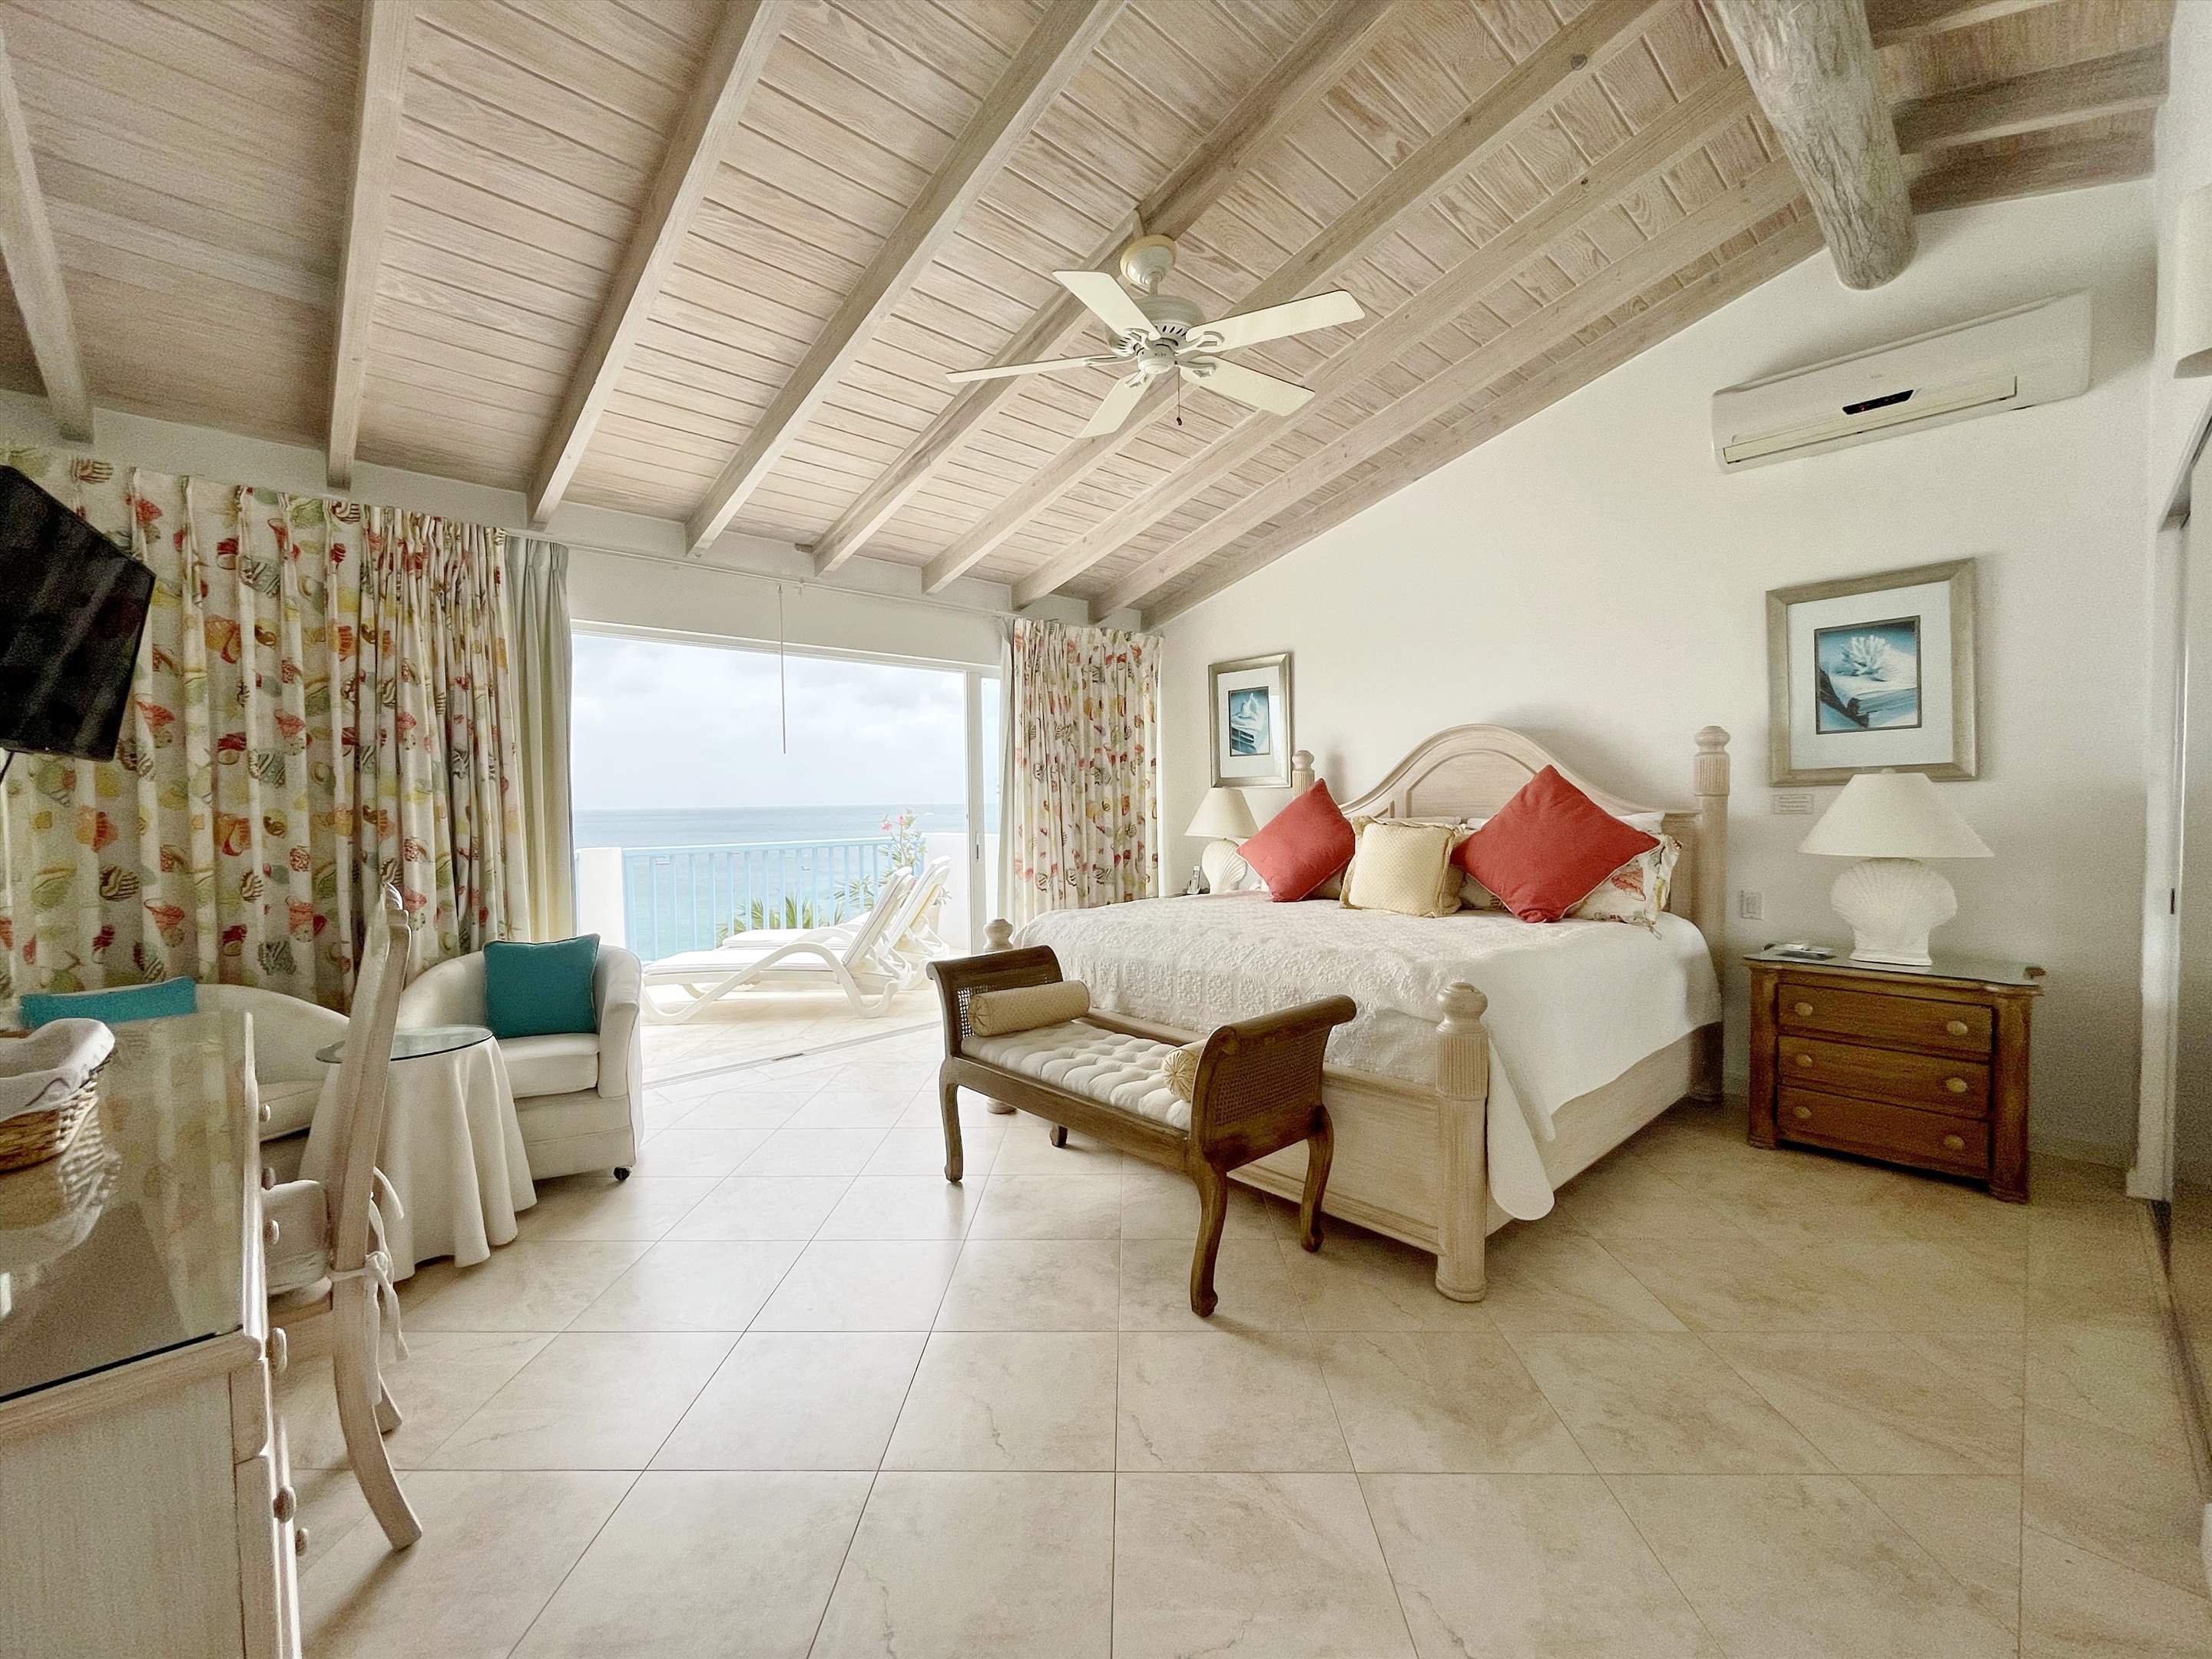 Villas on the Beach 403, 2 bedroom, 2 bedroom apartment in St. James & West Coast, Barbados Photo #17